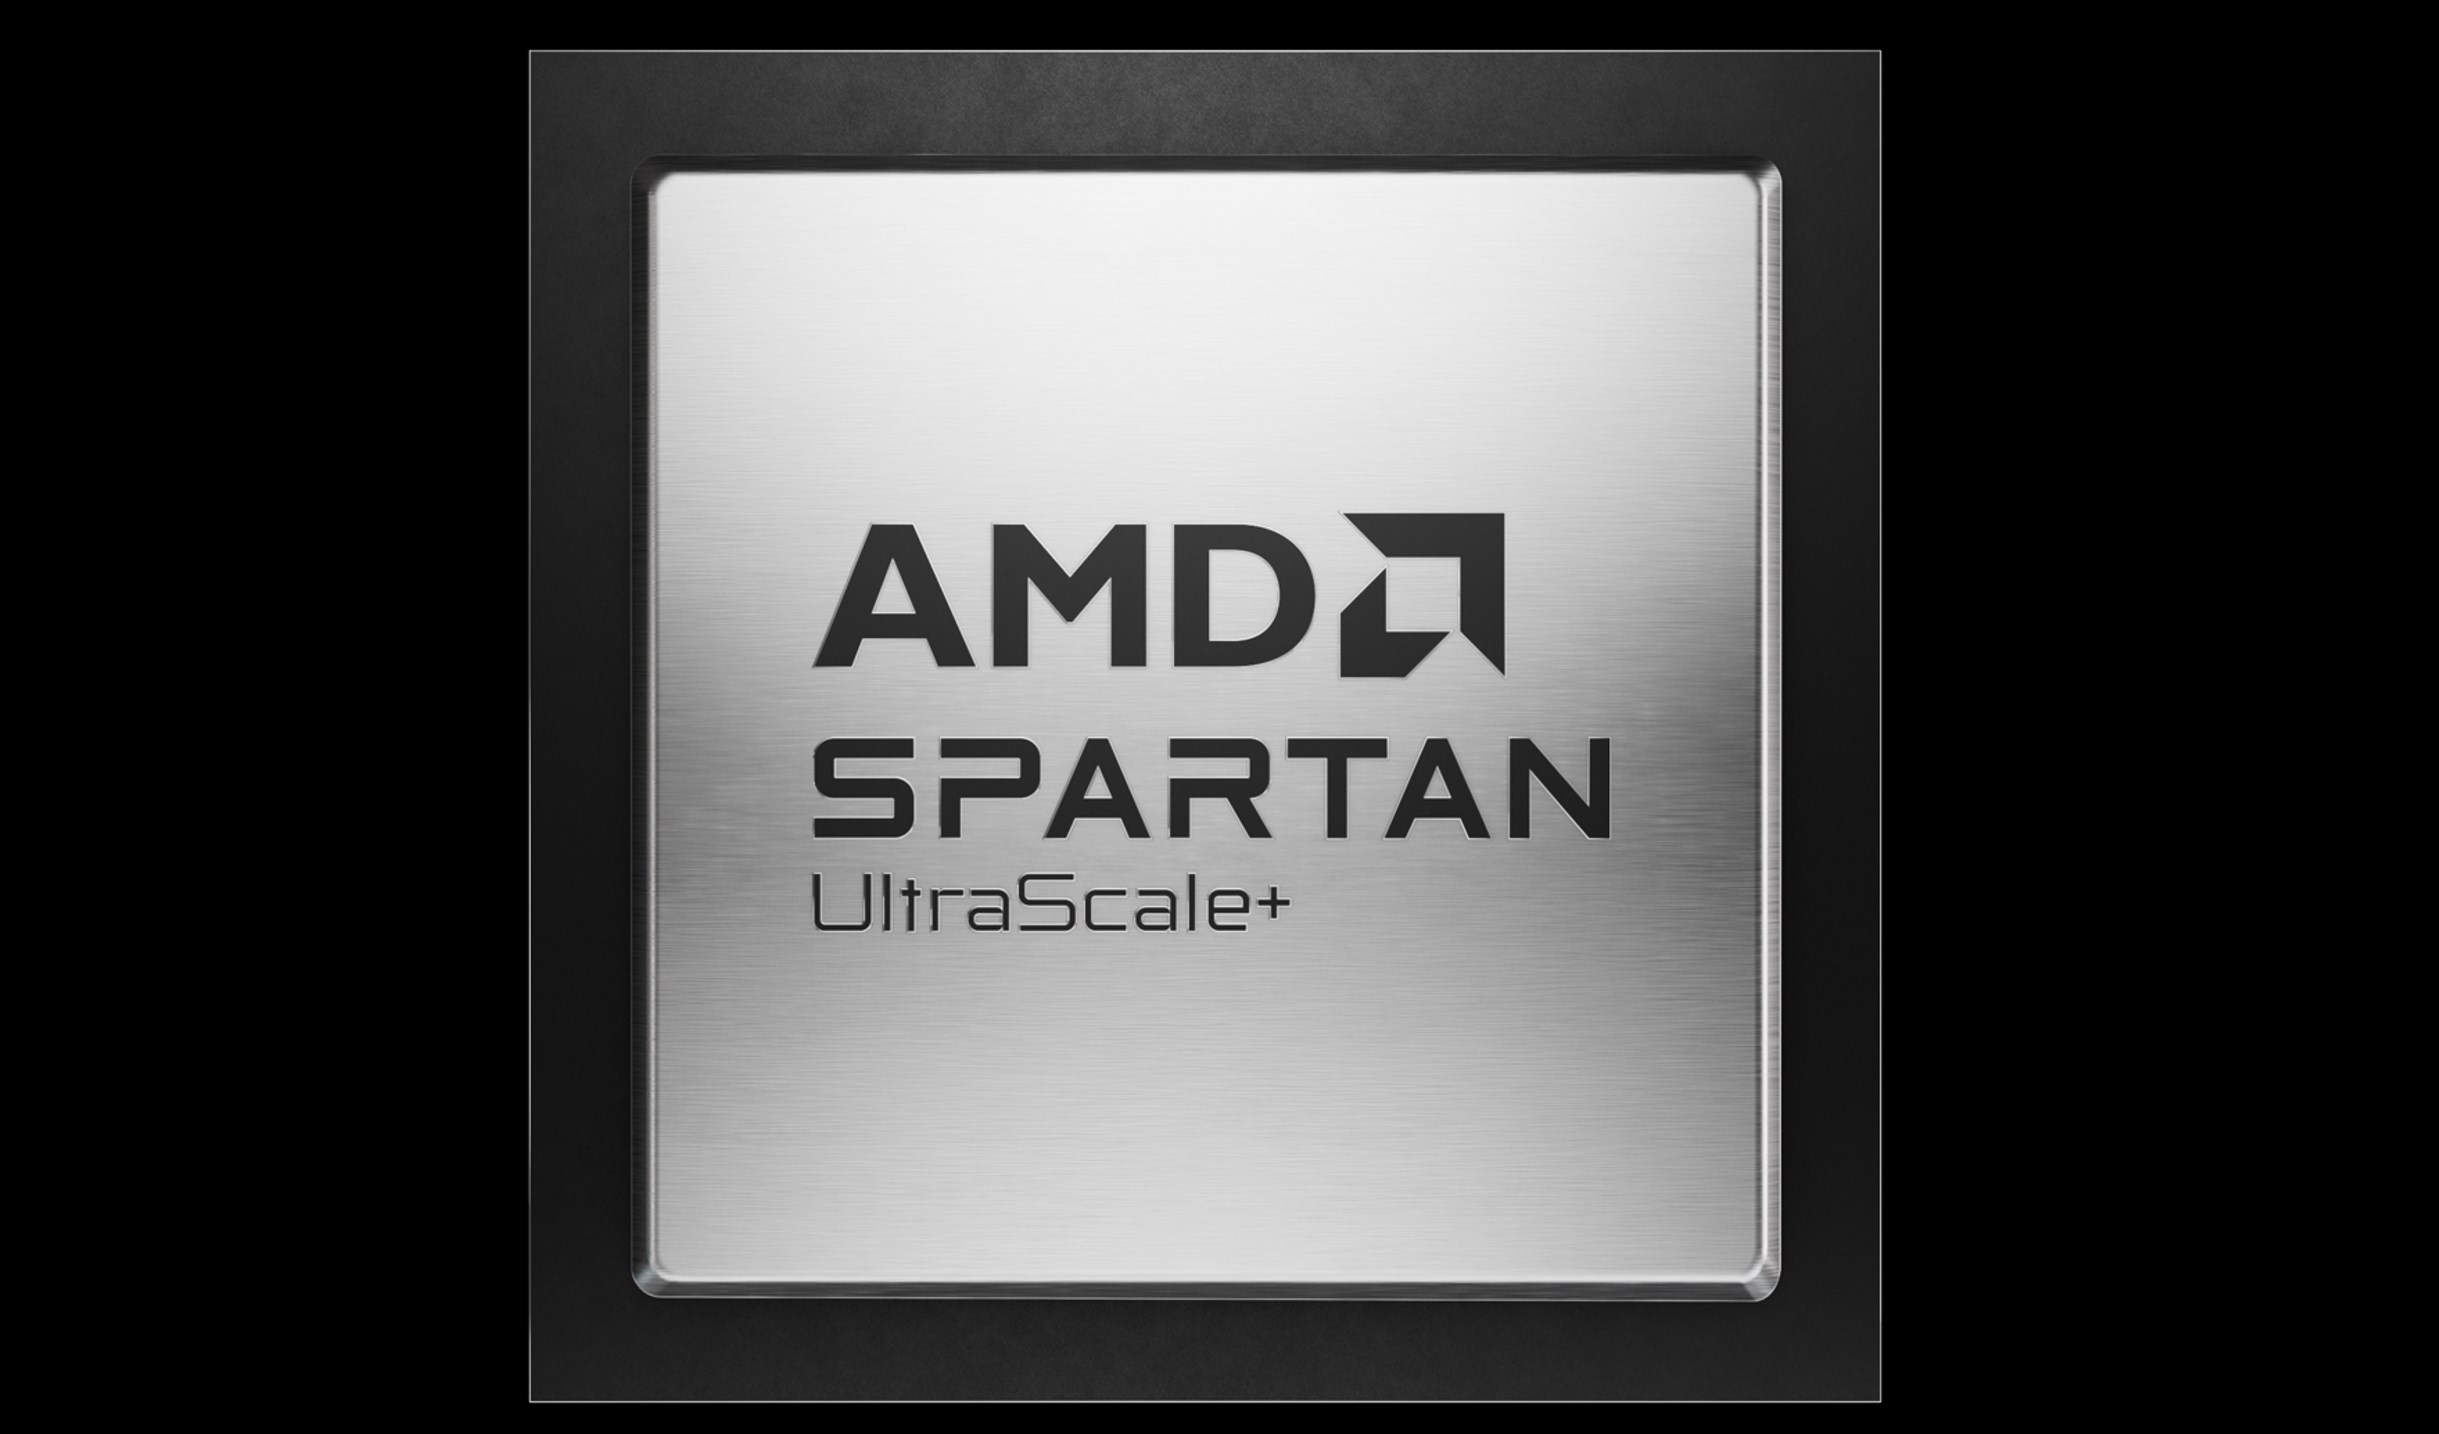 AMD推出Spartan UltraScale+ FPGA 系列：面向边缘端应用，持续优化成本并强化安全